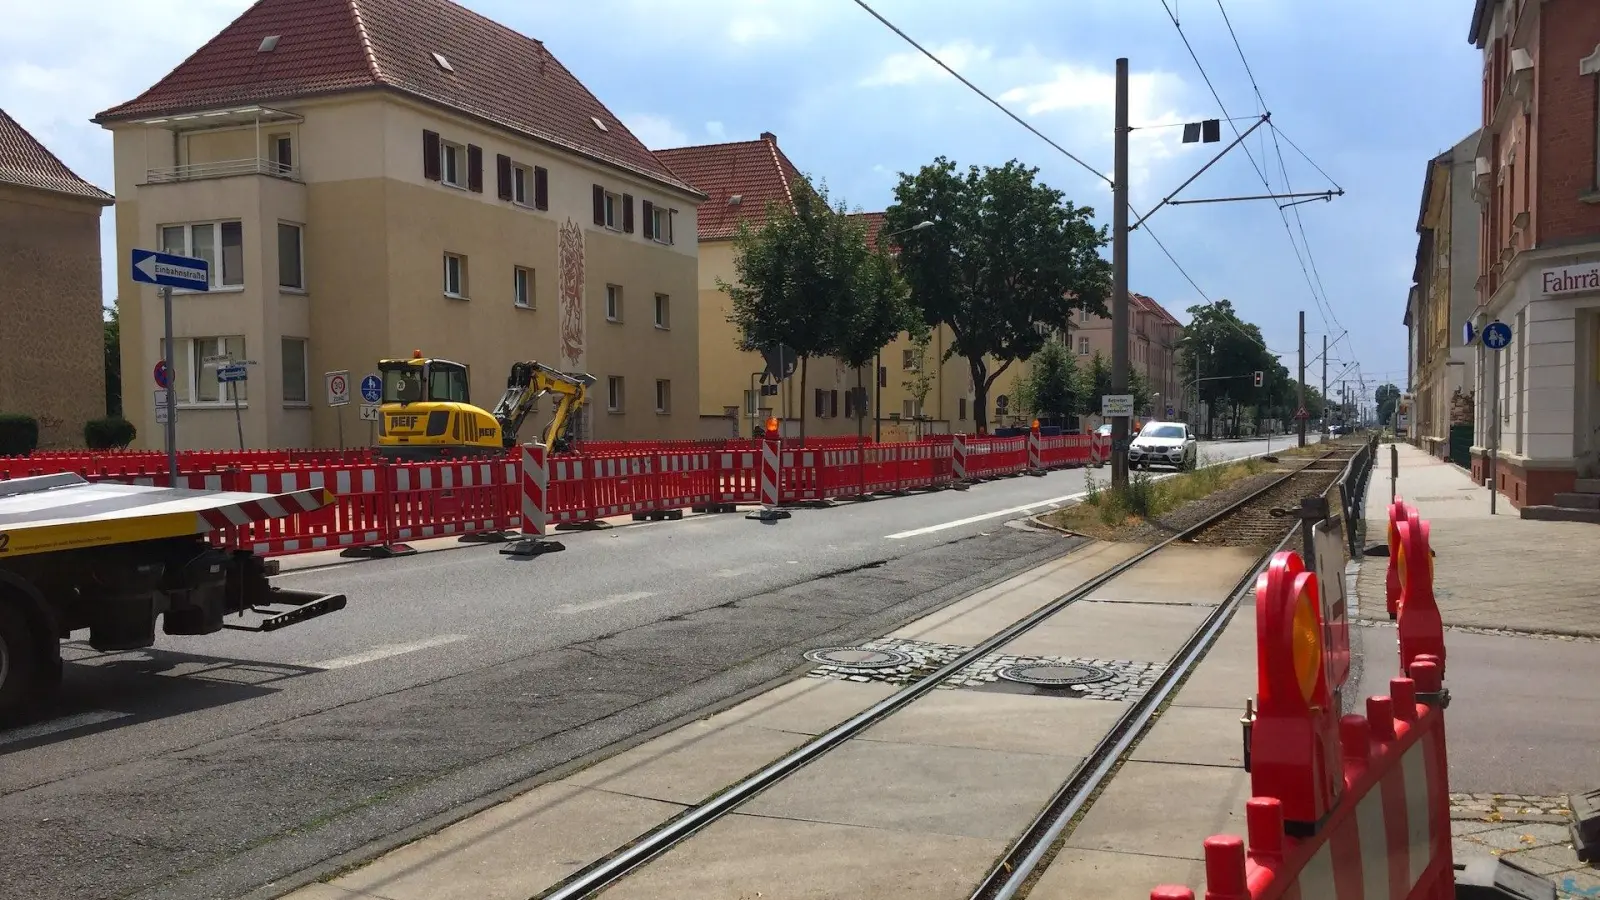 B87 in Taucha Richtung Leipzig gesperrt - und trotzdem kein Stau (Foto: taucha-kompakt.de)